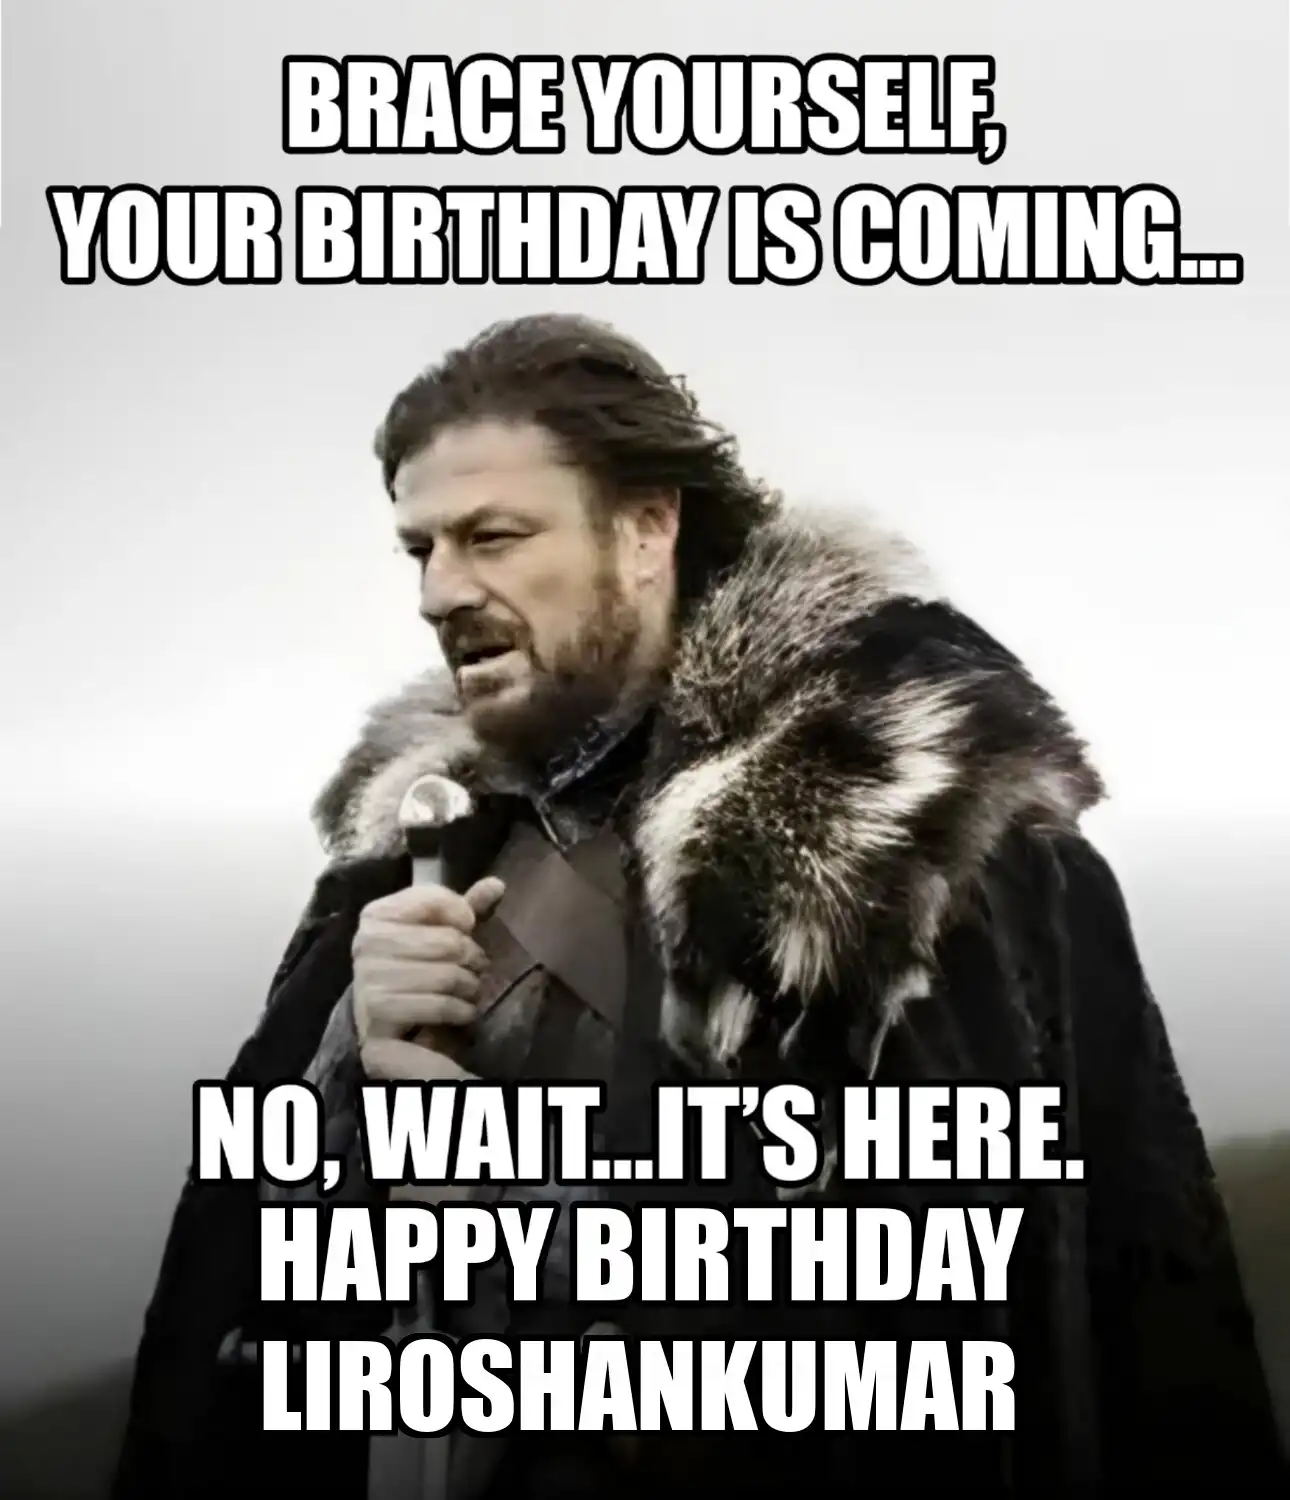 Happy Birthday Liroshankumar Brace Yourself Your Birthday Is Coming Meme